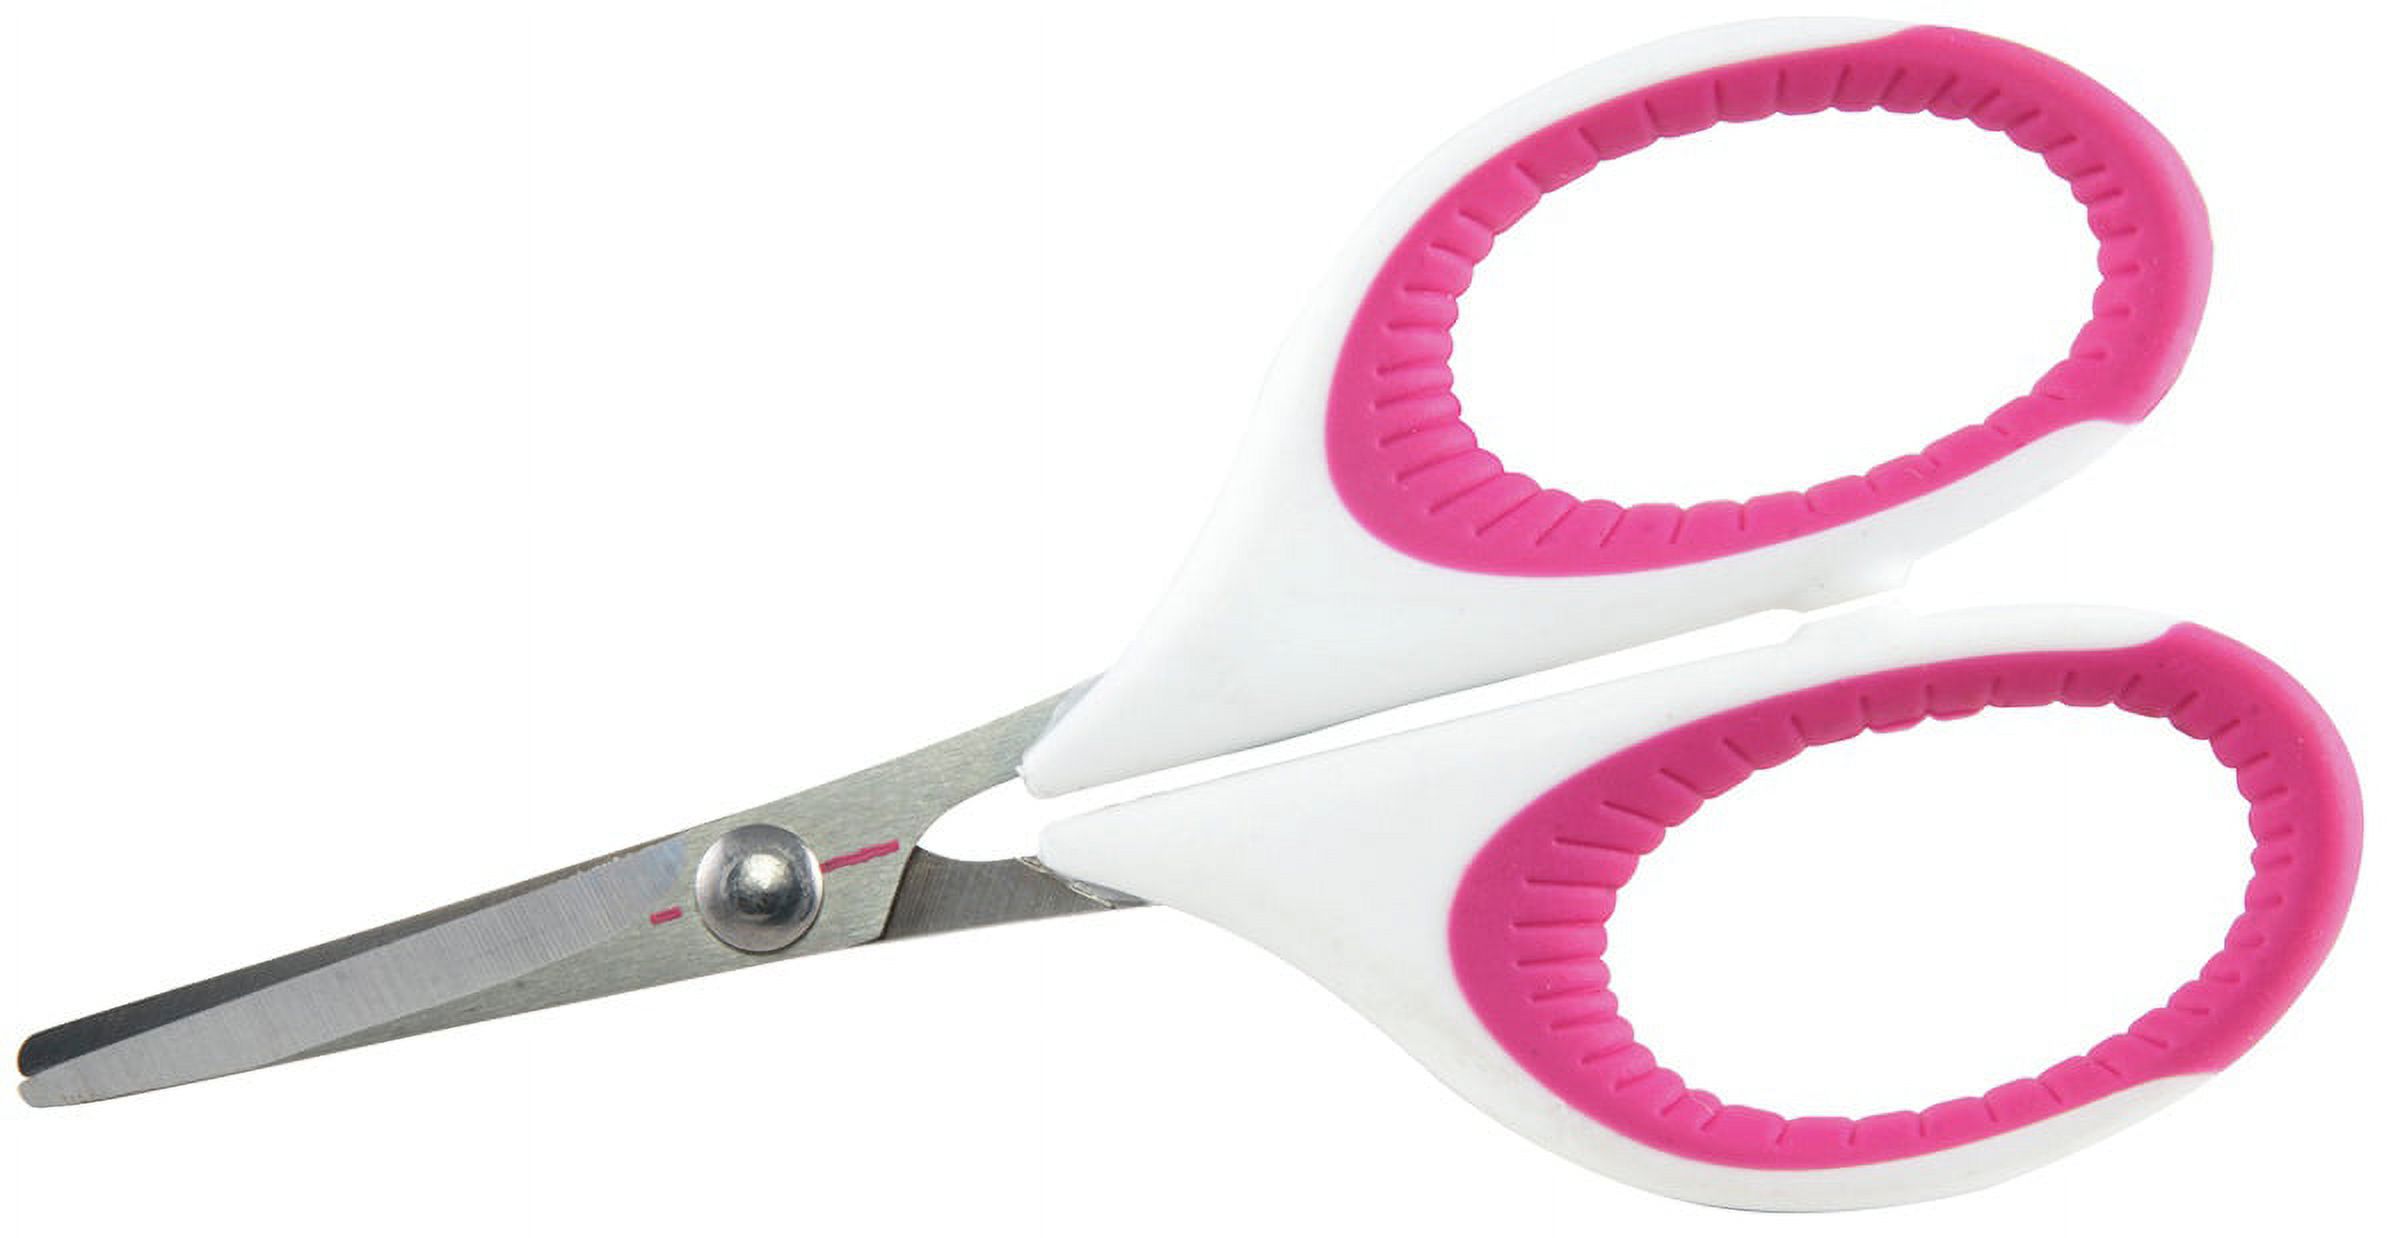 Singer Comfort Grip Craft Scissors 4"-Pink - image 4 of 4